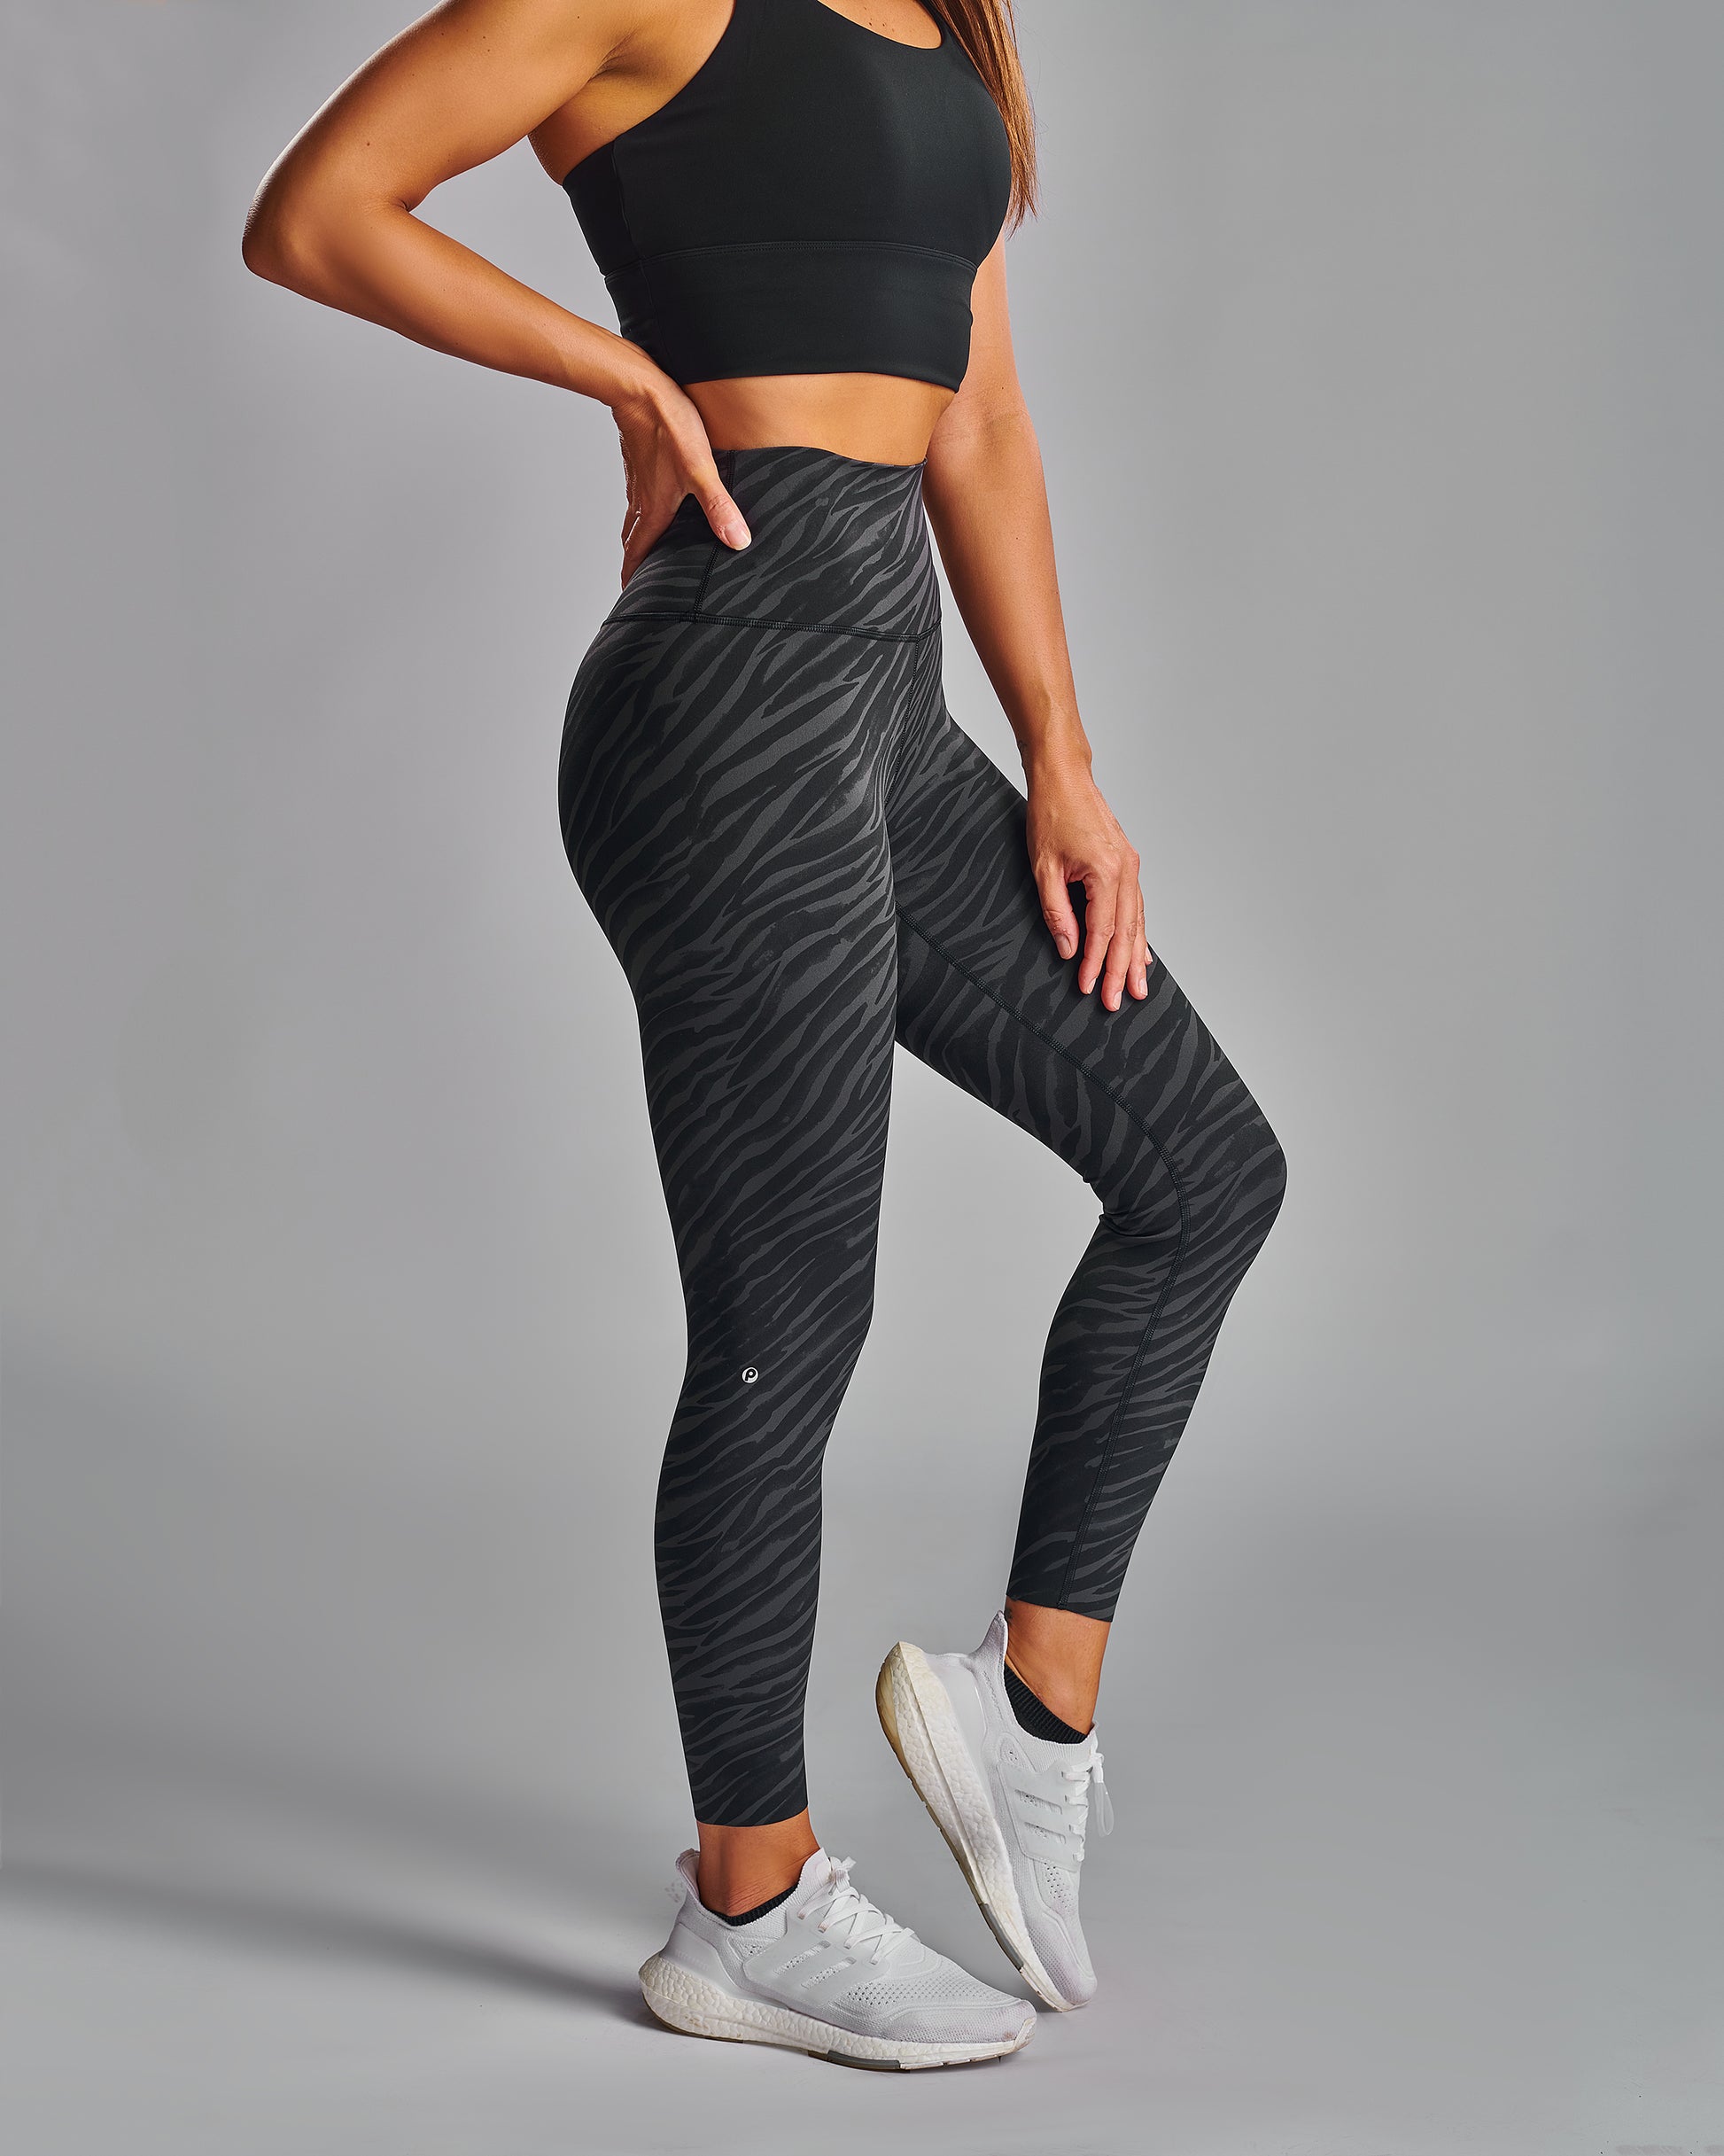 Flex Leggings - Zebra – EQYL Activewear